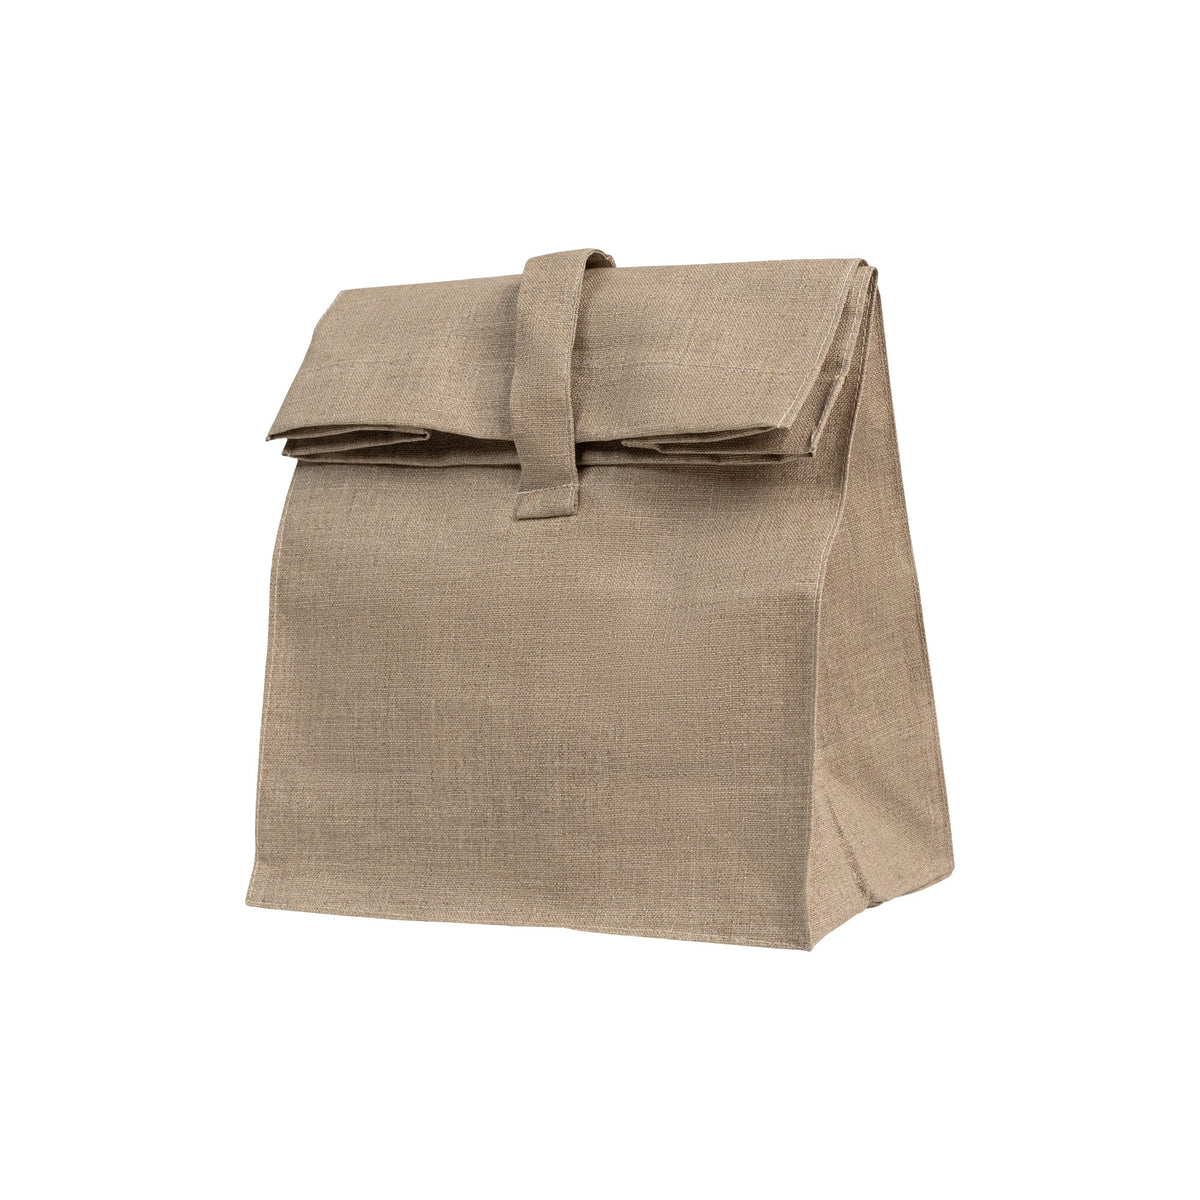 MENIQUE Reusable Waterproof Lunch Bag Natural